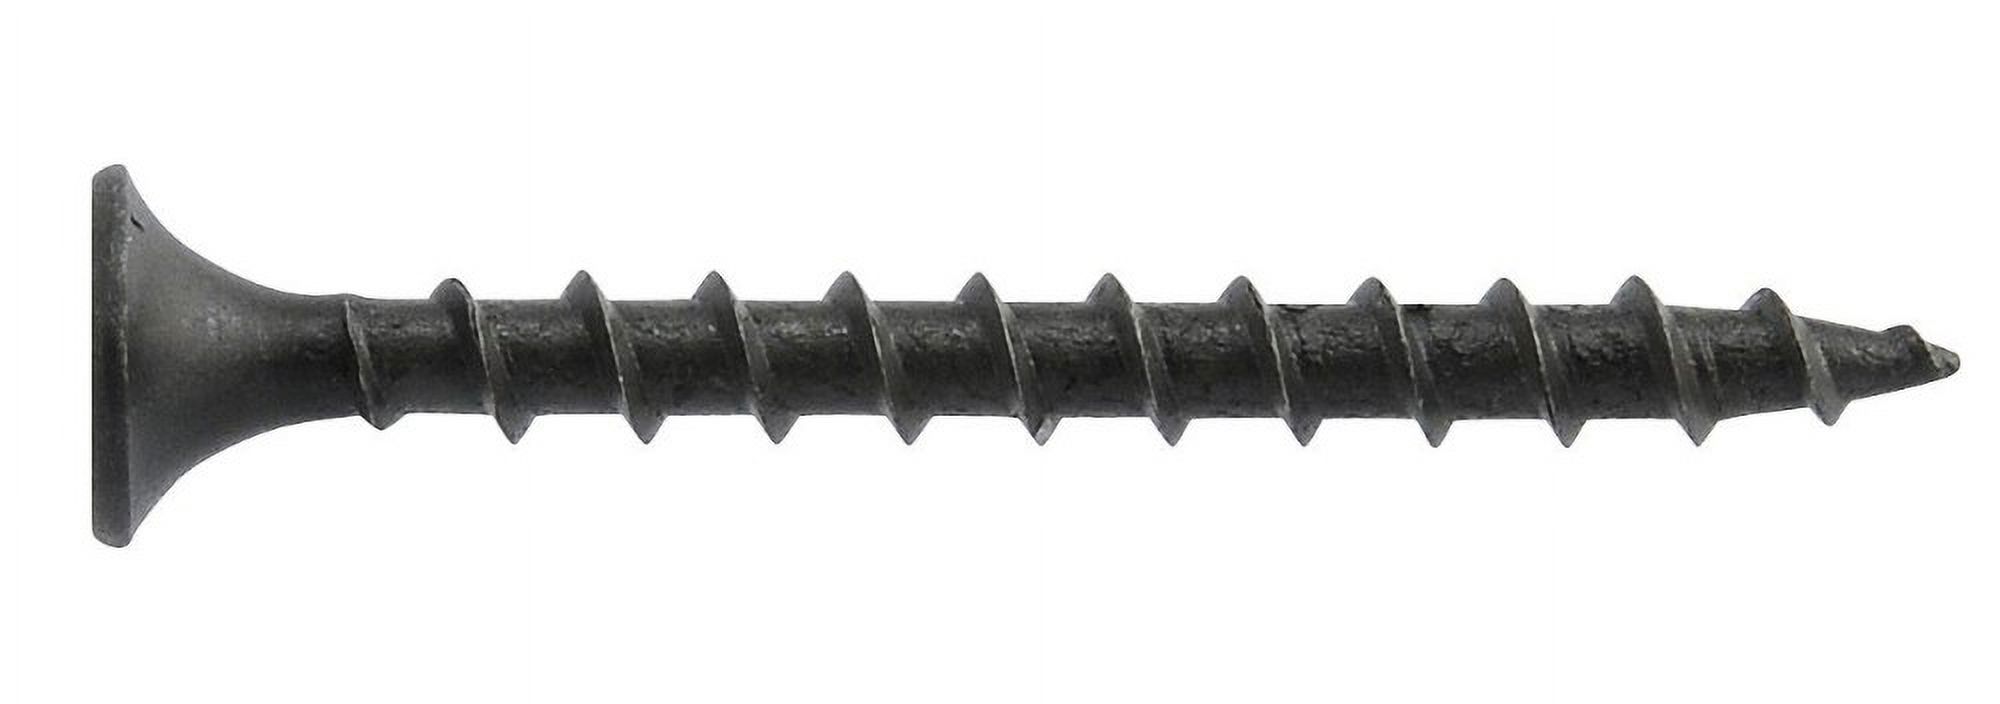 Hillman 40872 No.6 x 1.25 in. Coarse Thread Drywall Screw - image 2 of 2